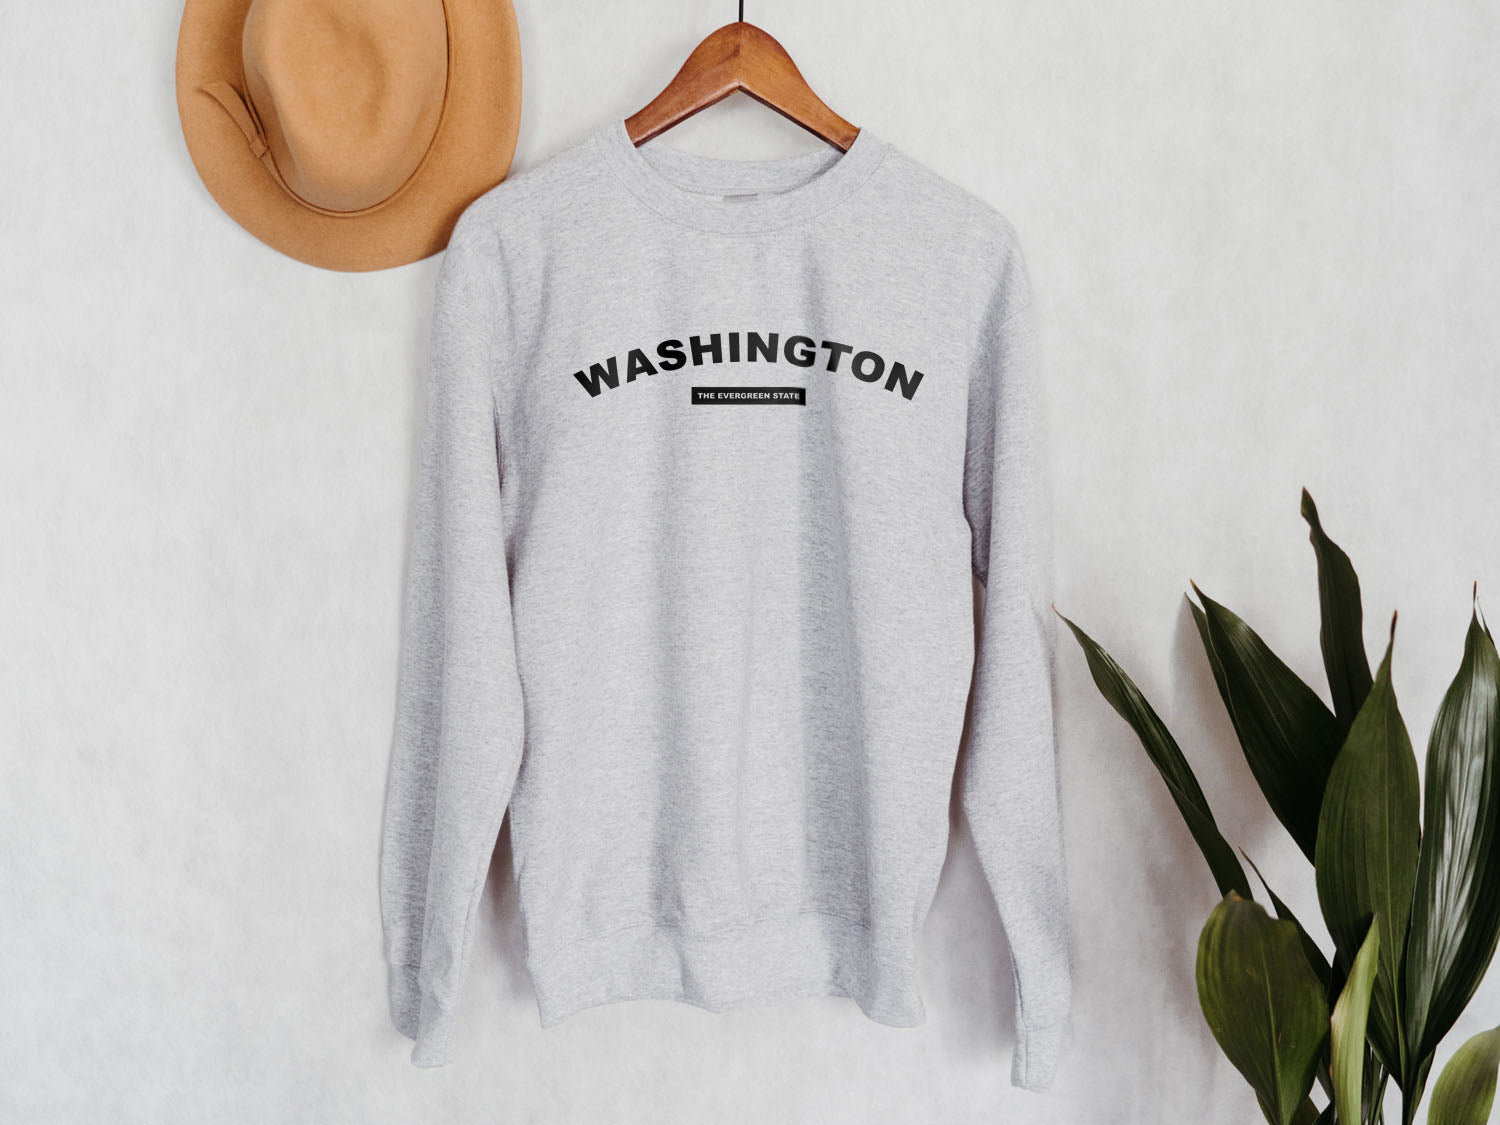 Washington The Evergreen State Sweatshirt - United States Name & Slogan Minimal Design Printed Sweatshirt